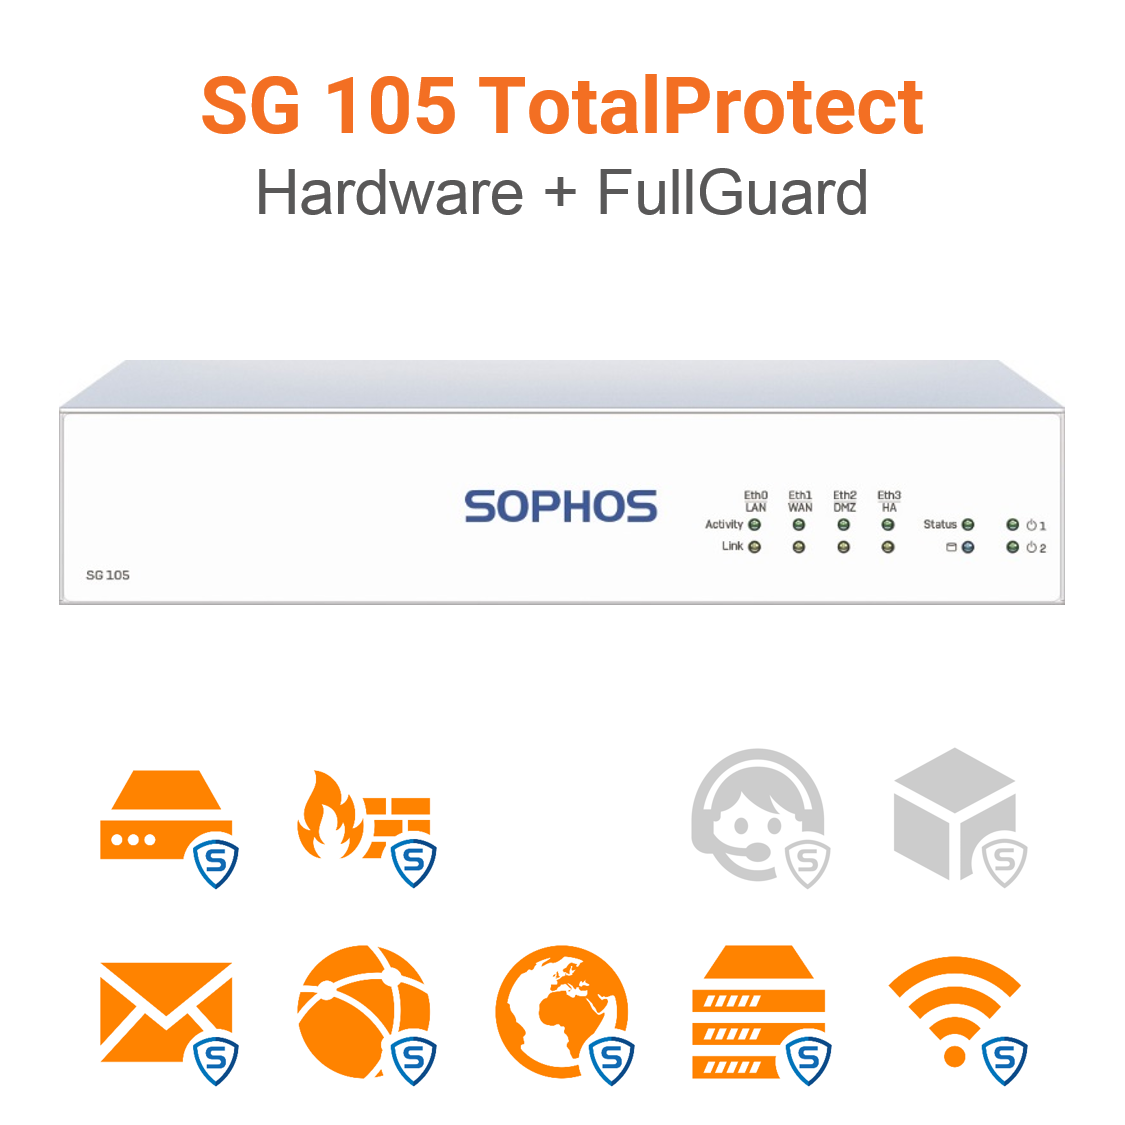 Sophos SG 105 TotalProtect Bundle (Hardware + Lizenz)